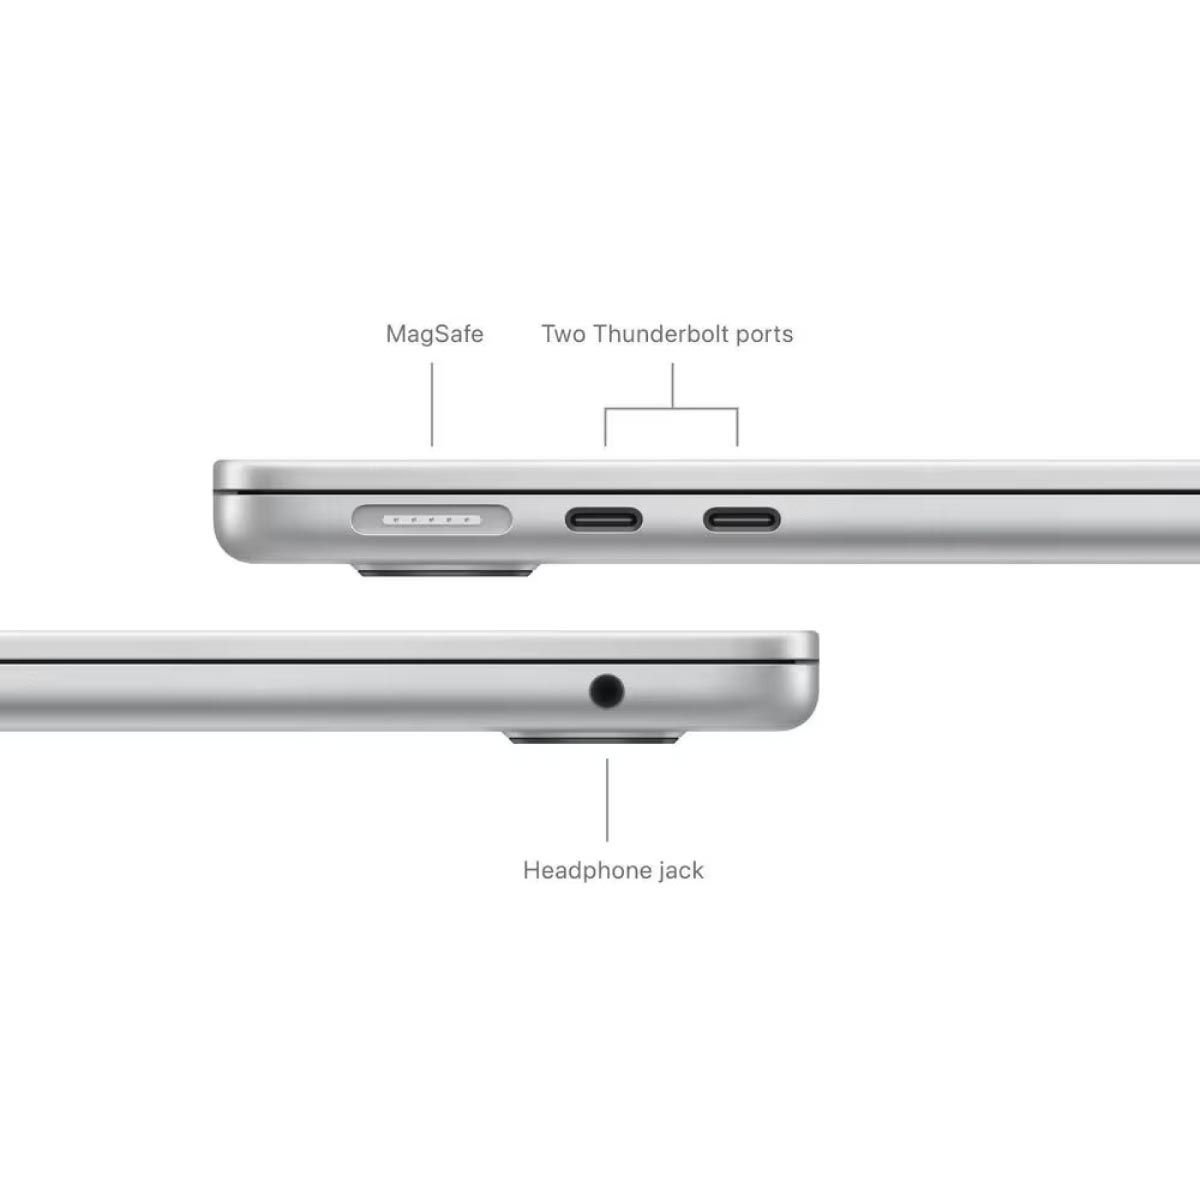 Apple MacBook Air (รุ่น 13 นิ้ว , ชิป M3) 256GB Silver